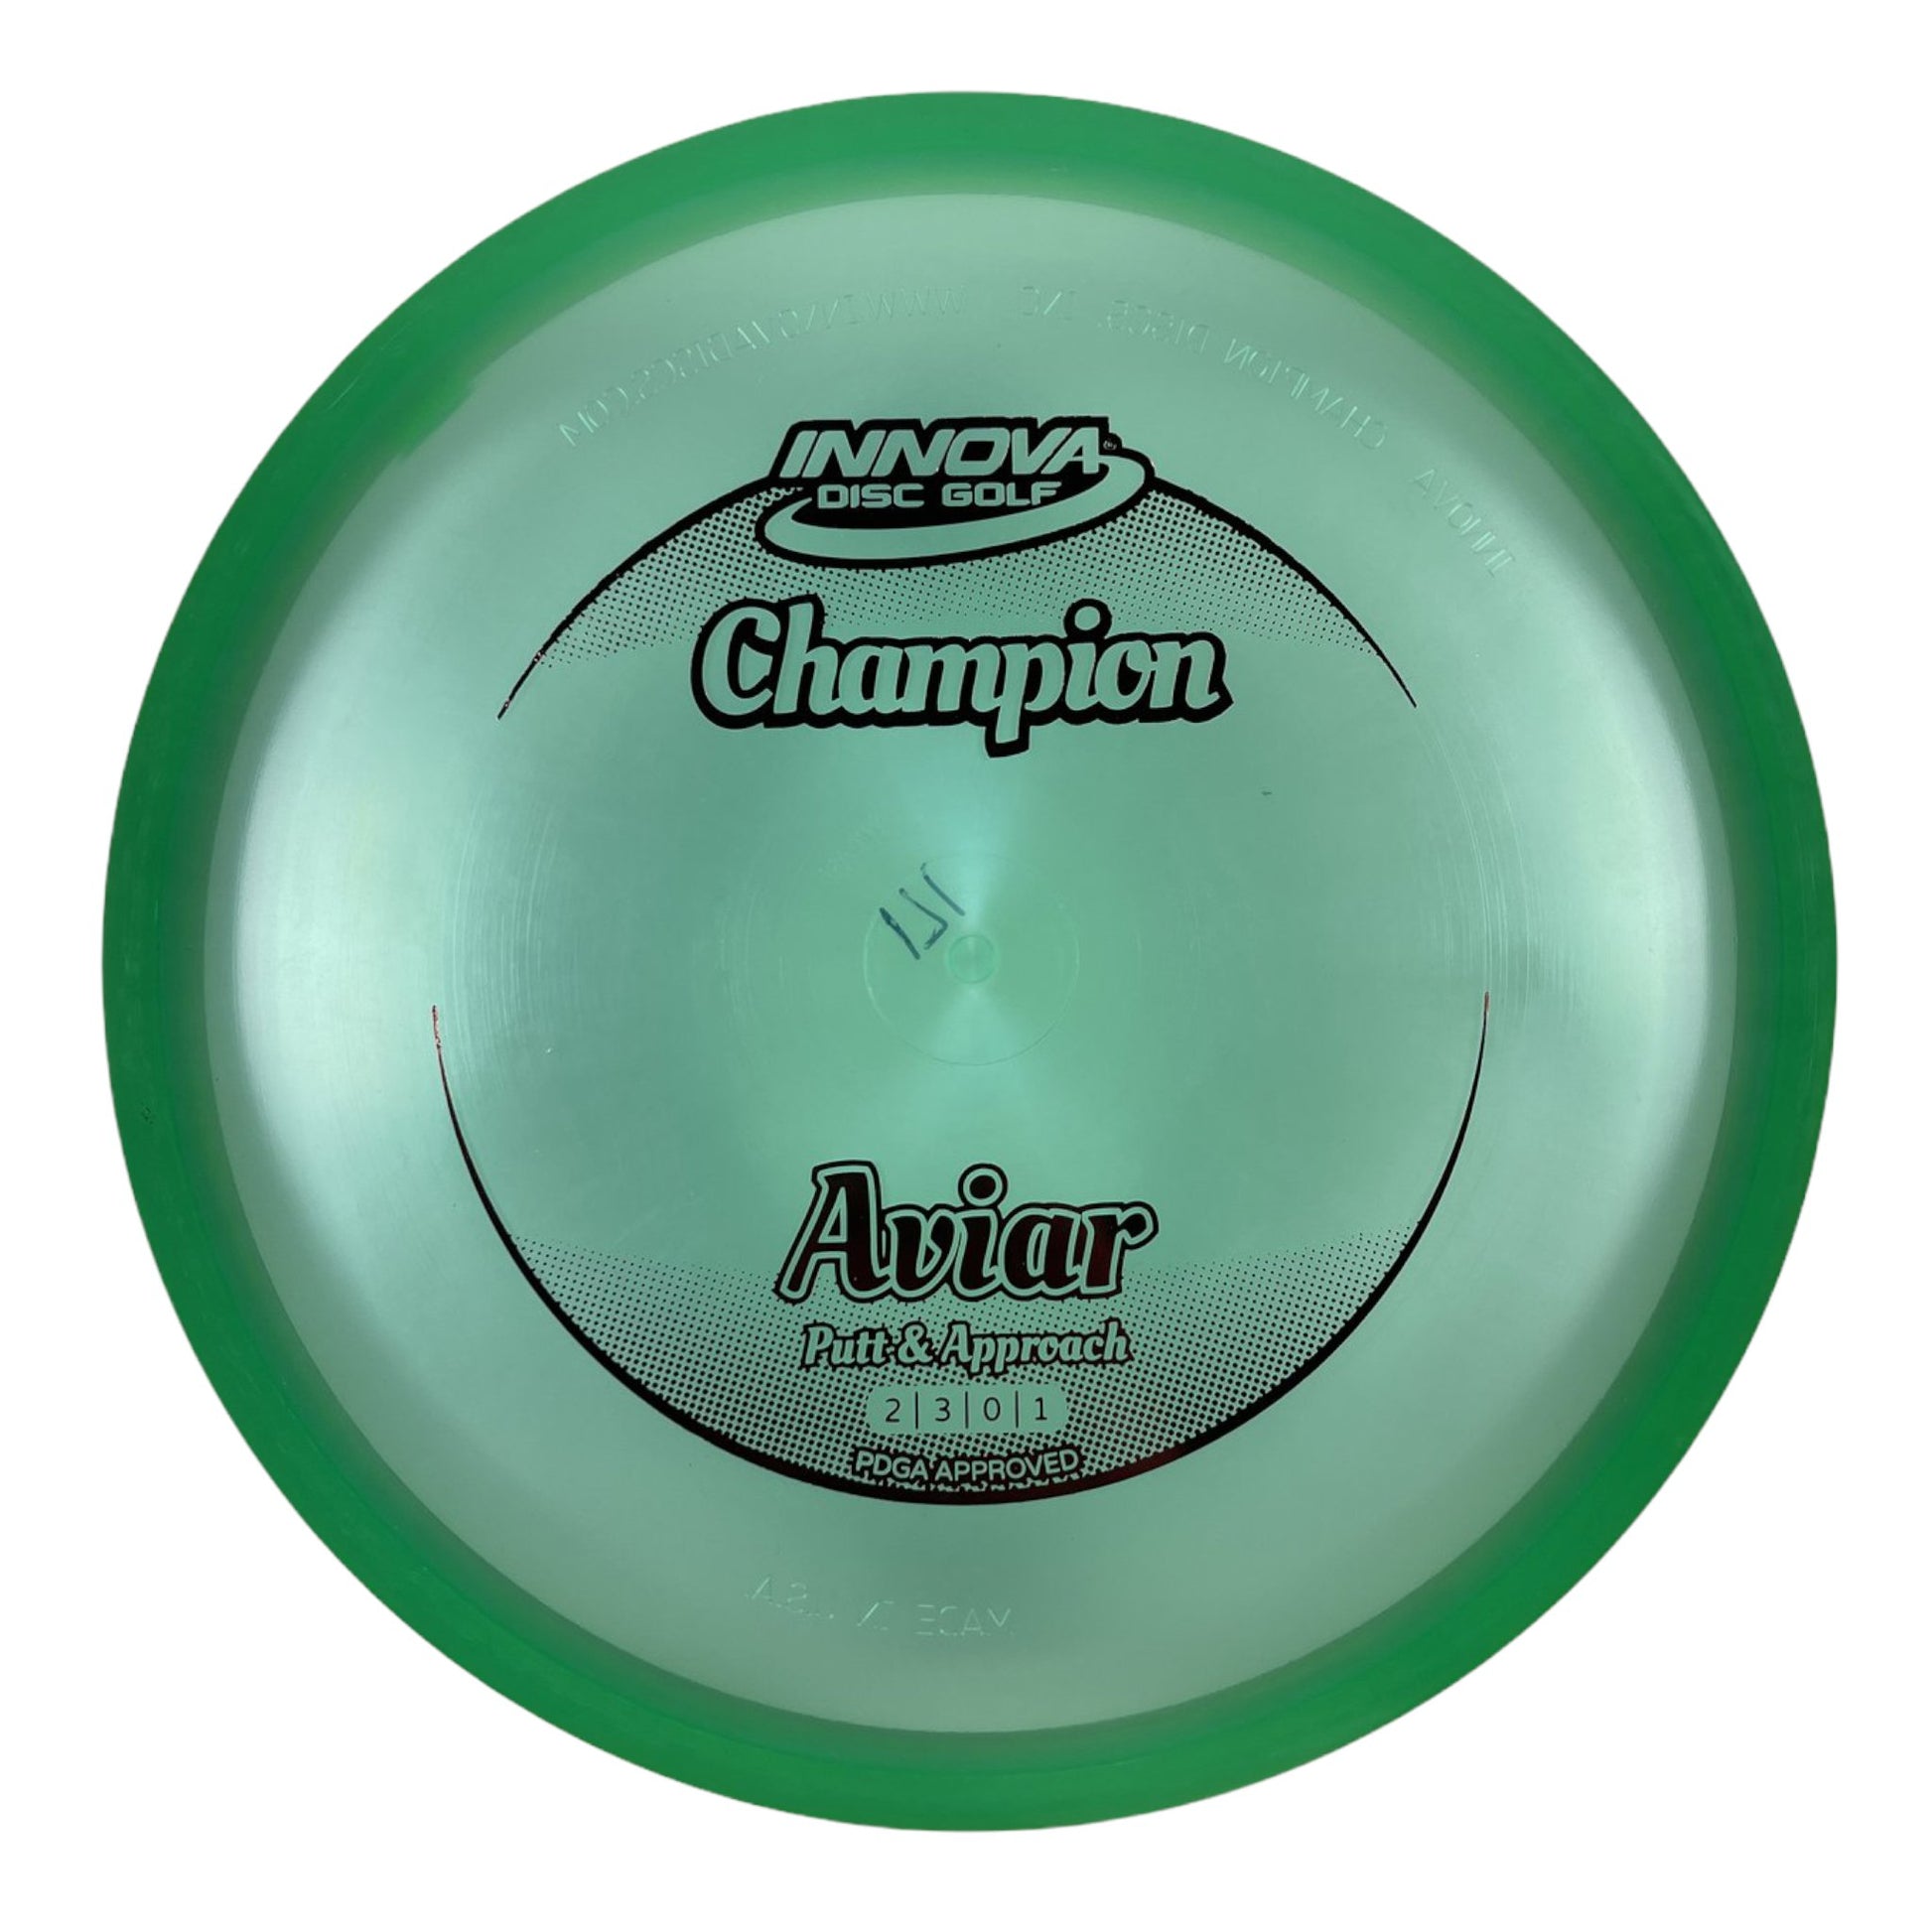 Innova Champion Discs Aviar | Champion | Green/Red 171-175g Disc Golf